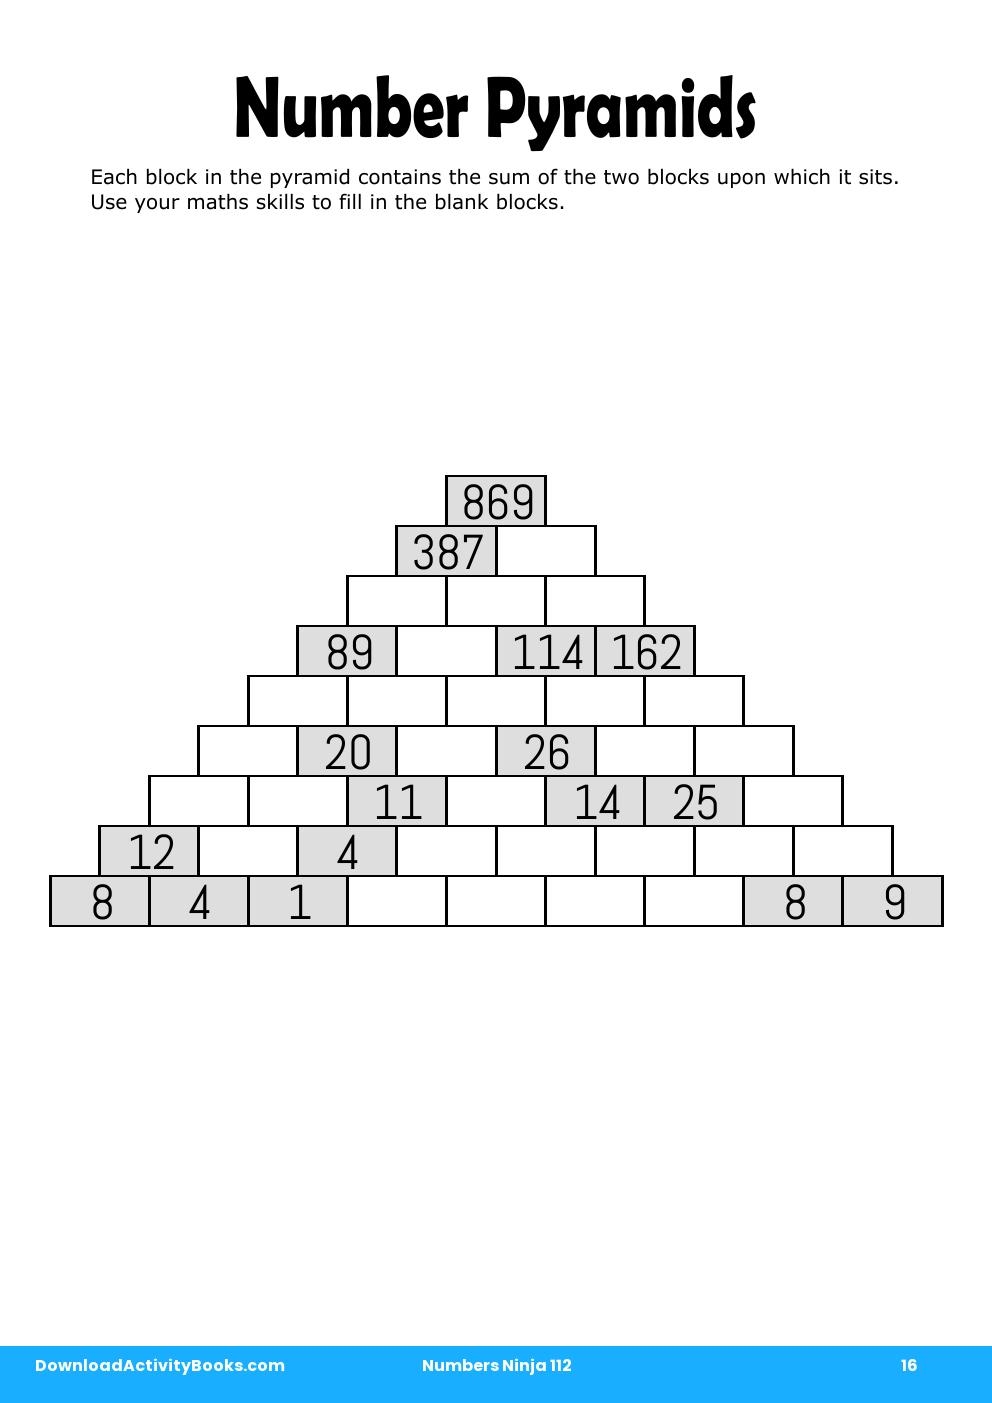 Number Pyramids in Numbers Ninja 112